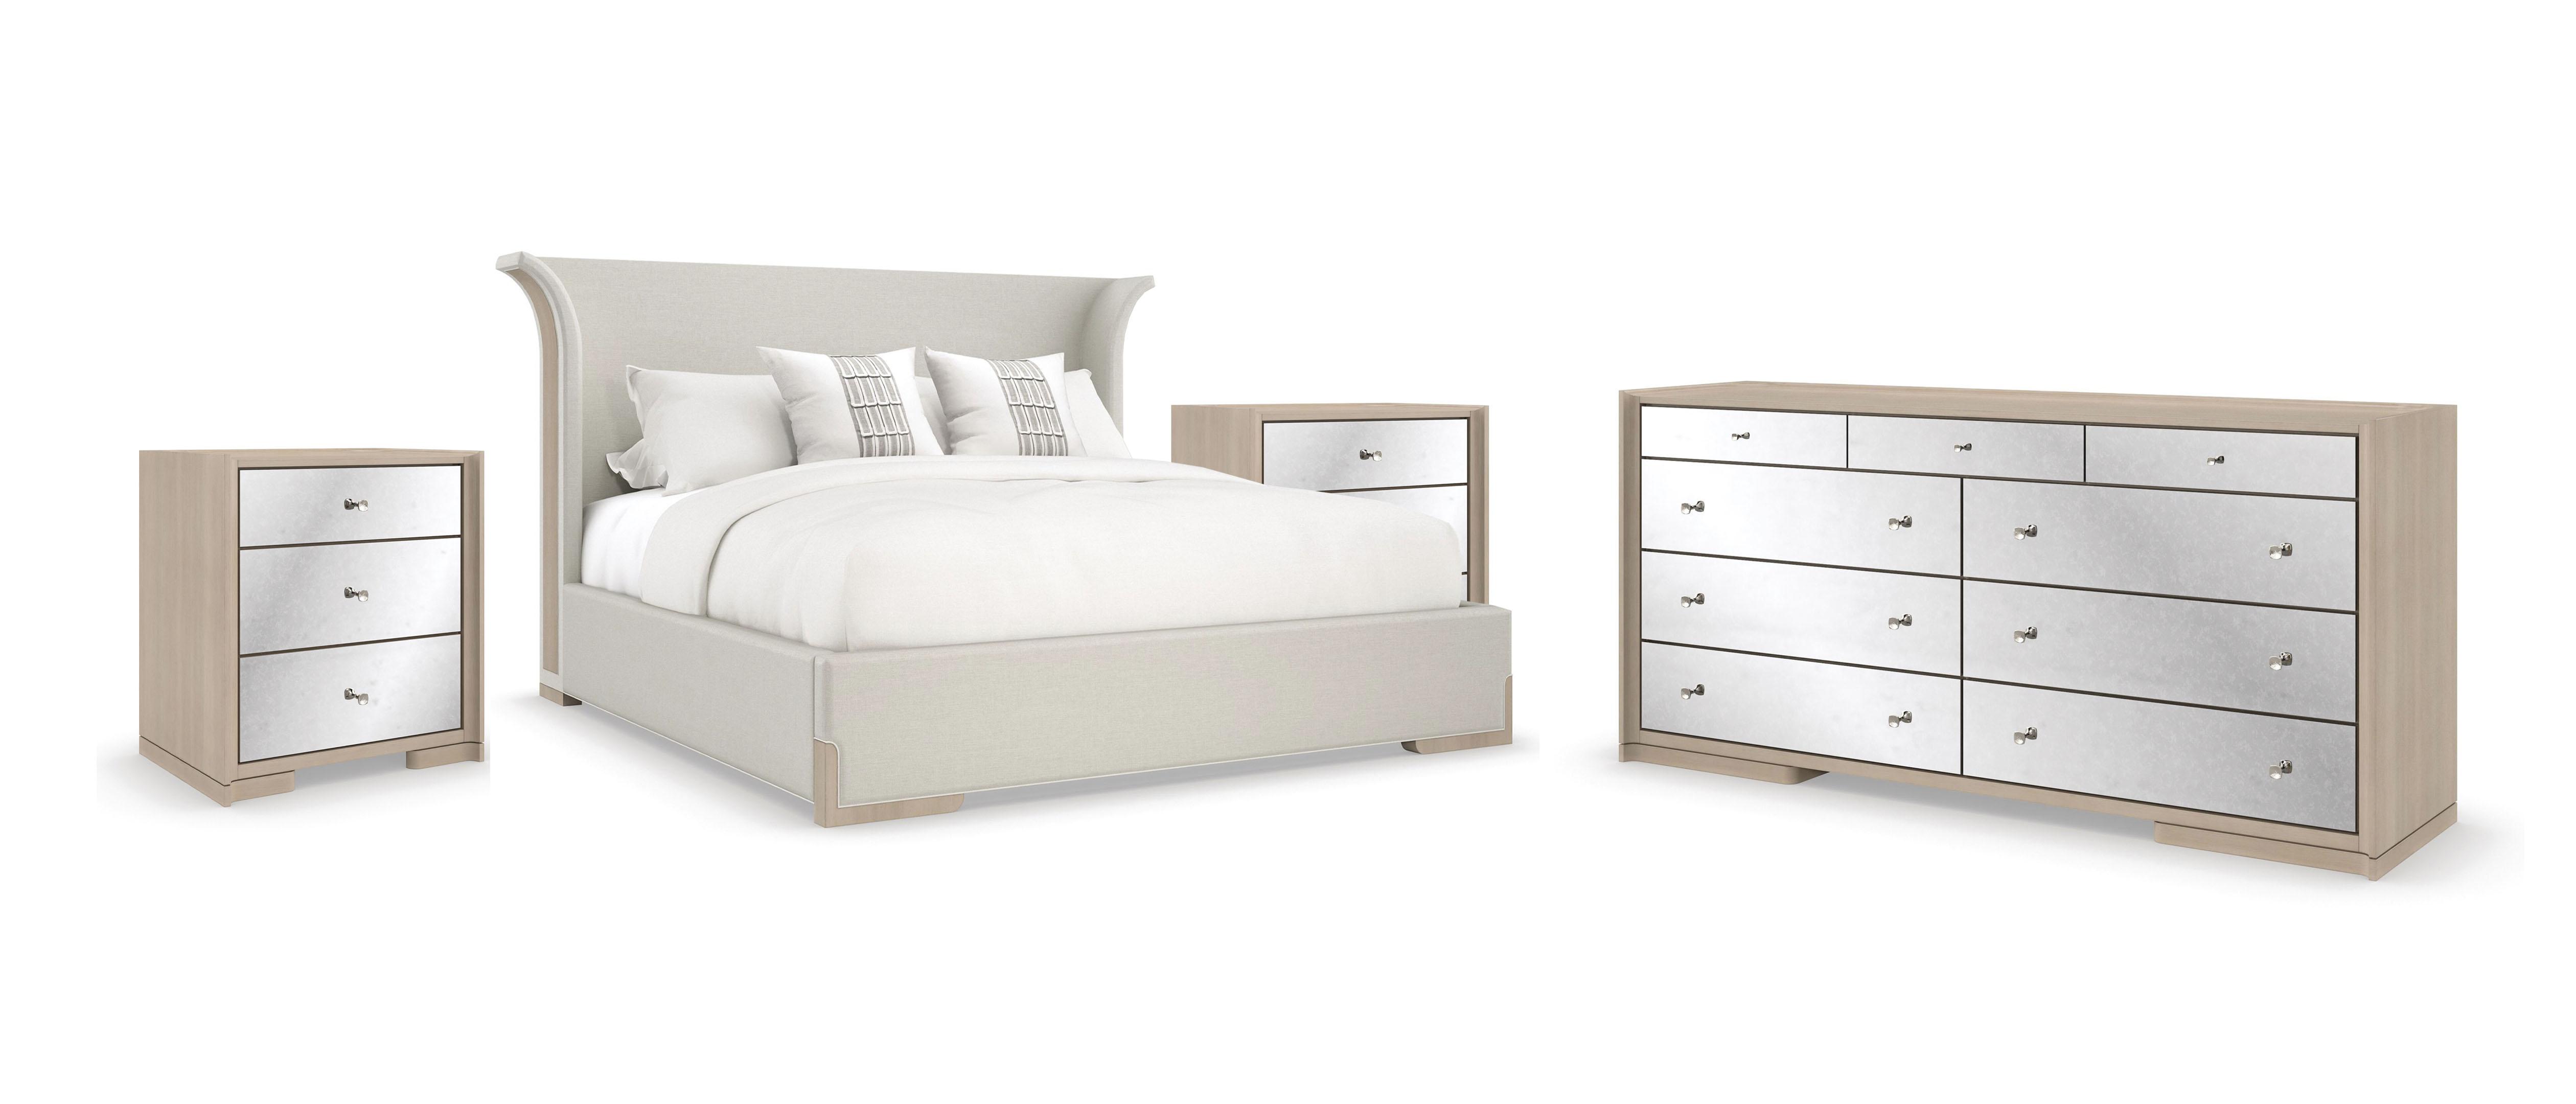 Contemporary Platform Bedroom Set BEAUTY SLEEP-KING / IN YOUR DREAMS CLA-021-102-Set-4 in Light Gray 